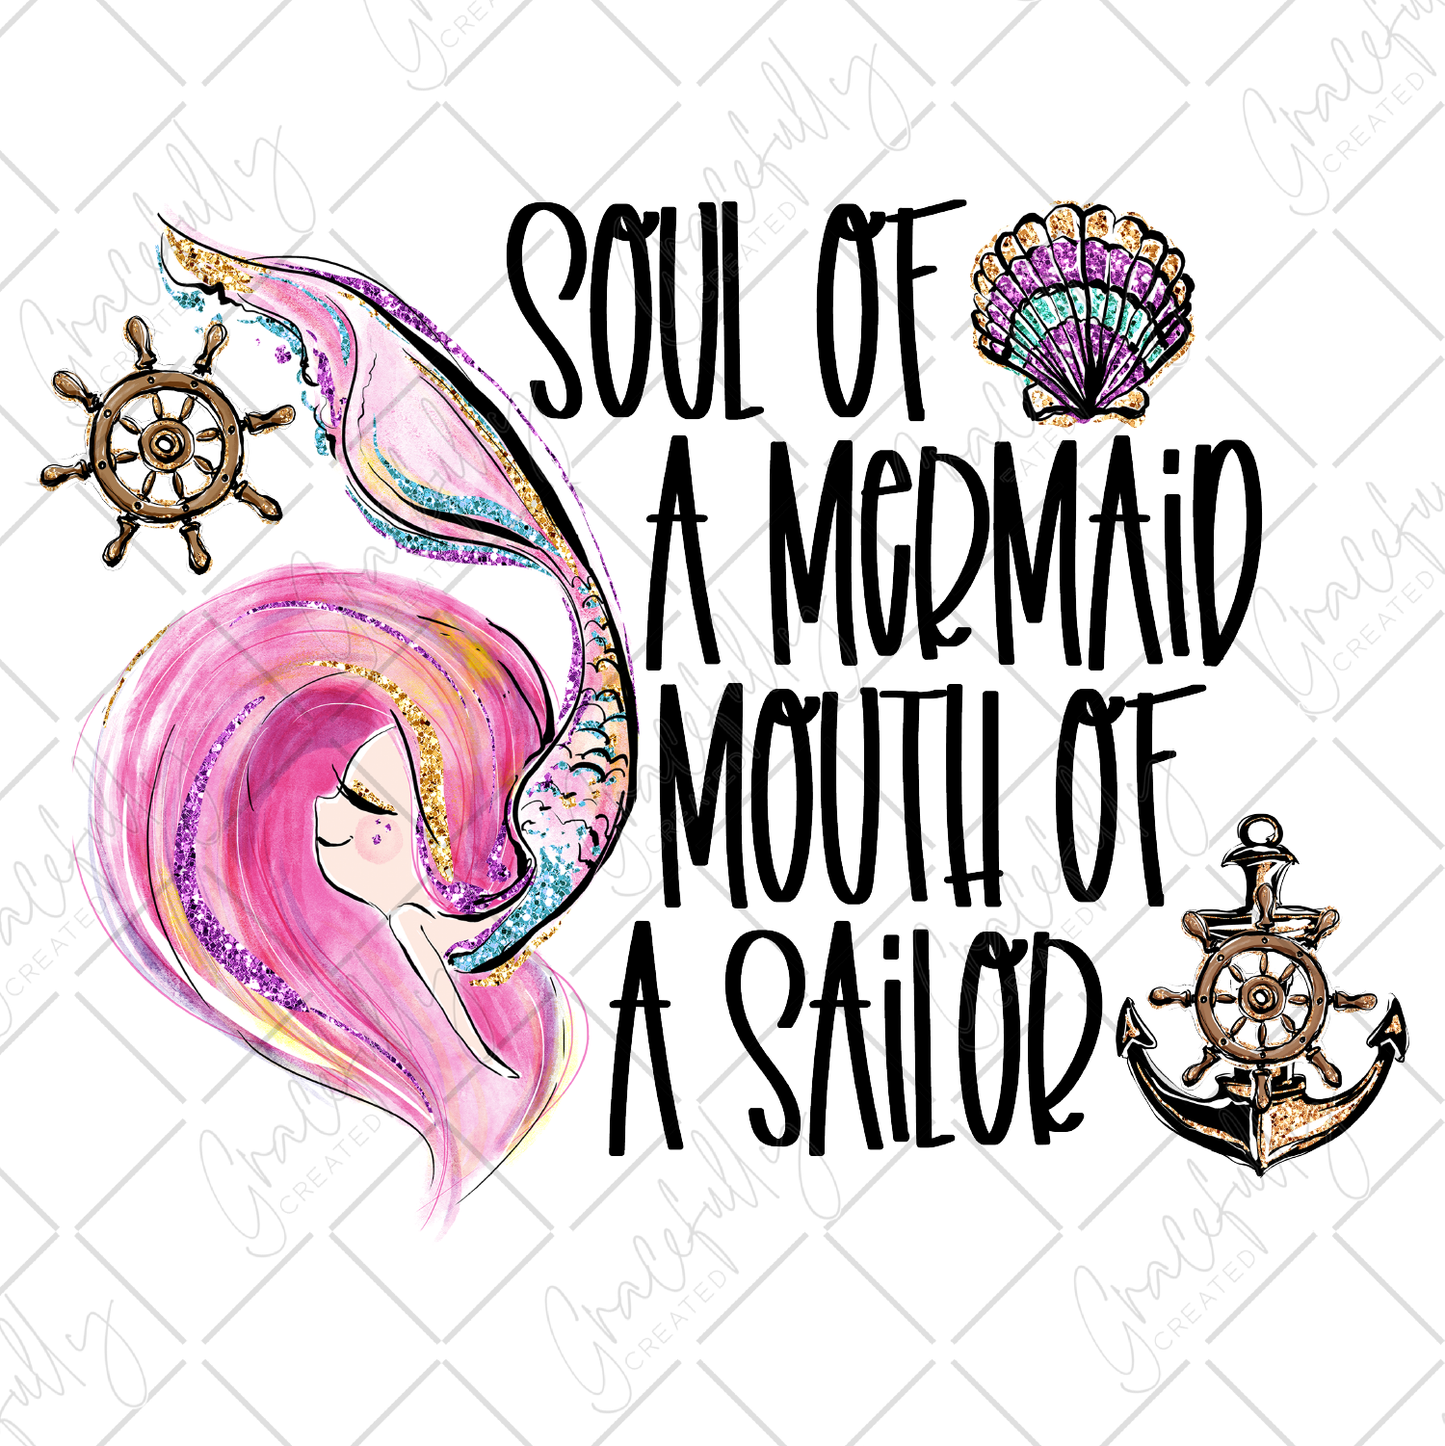 A24 Soul of a Mermaid